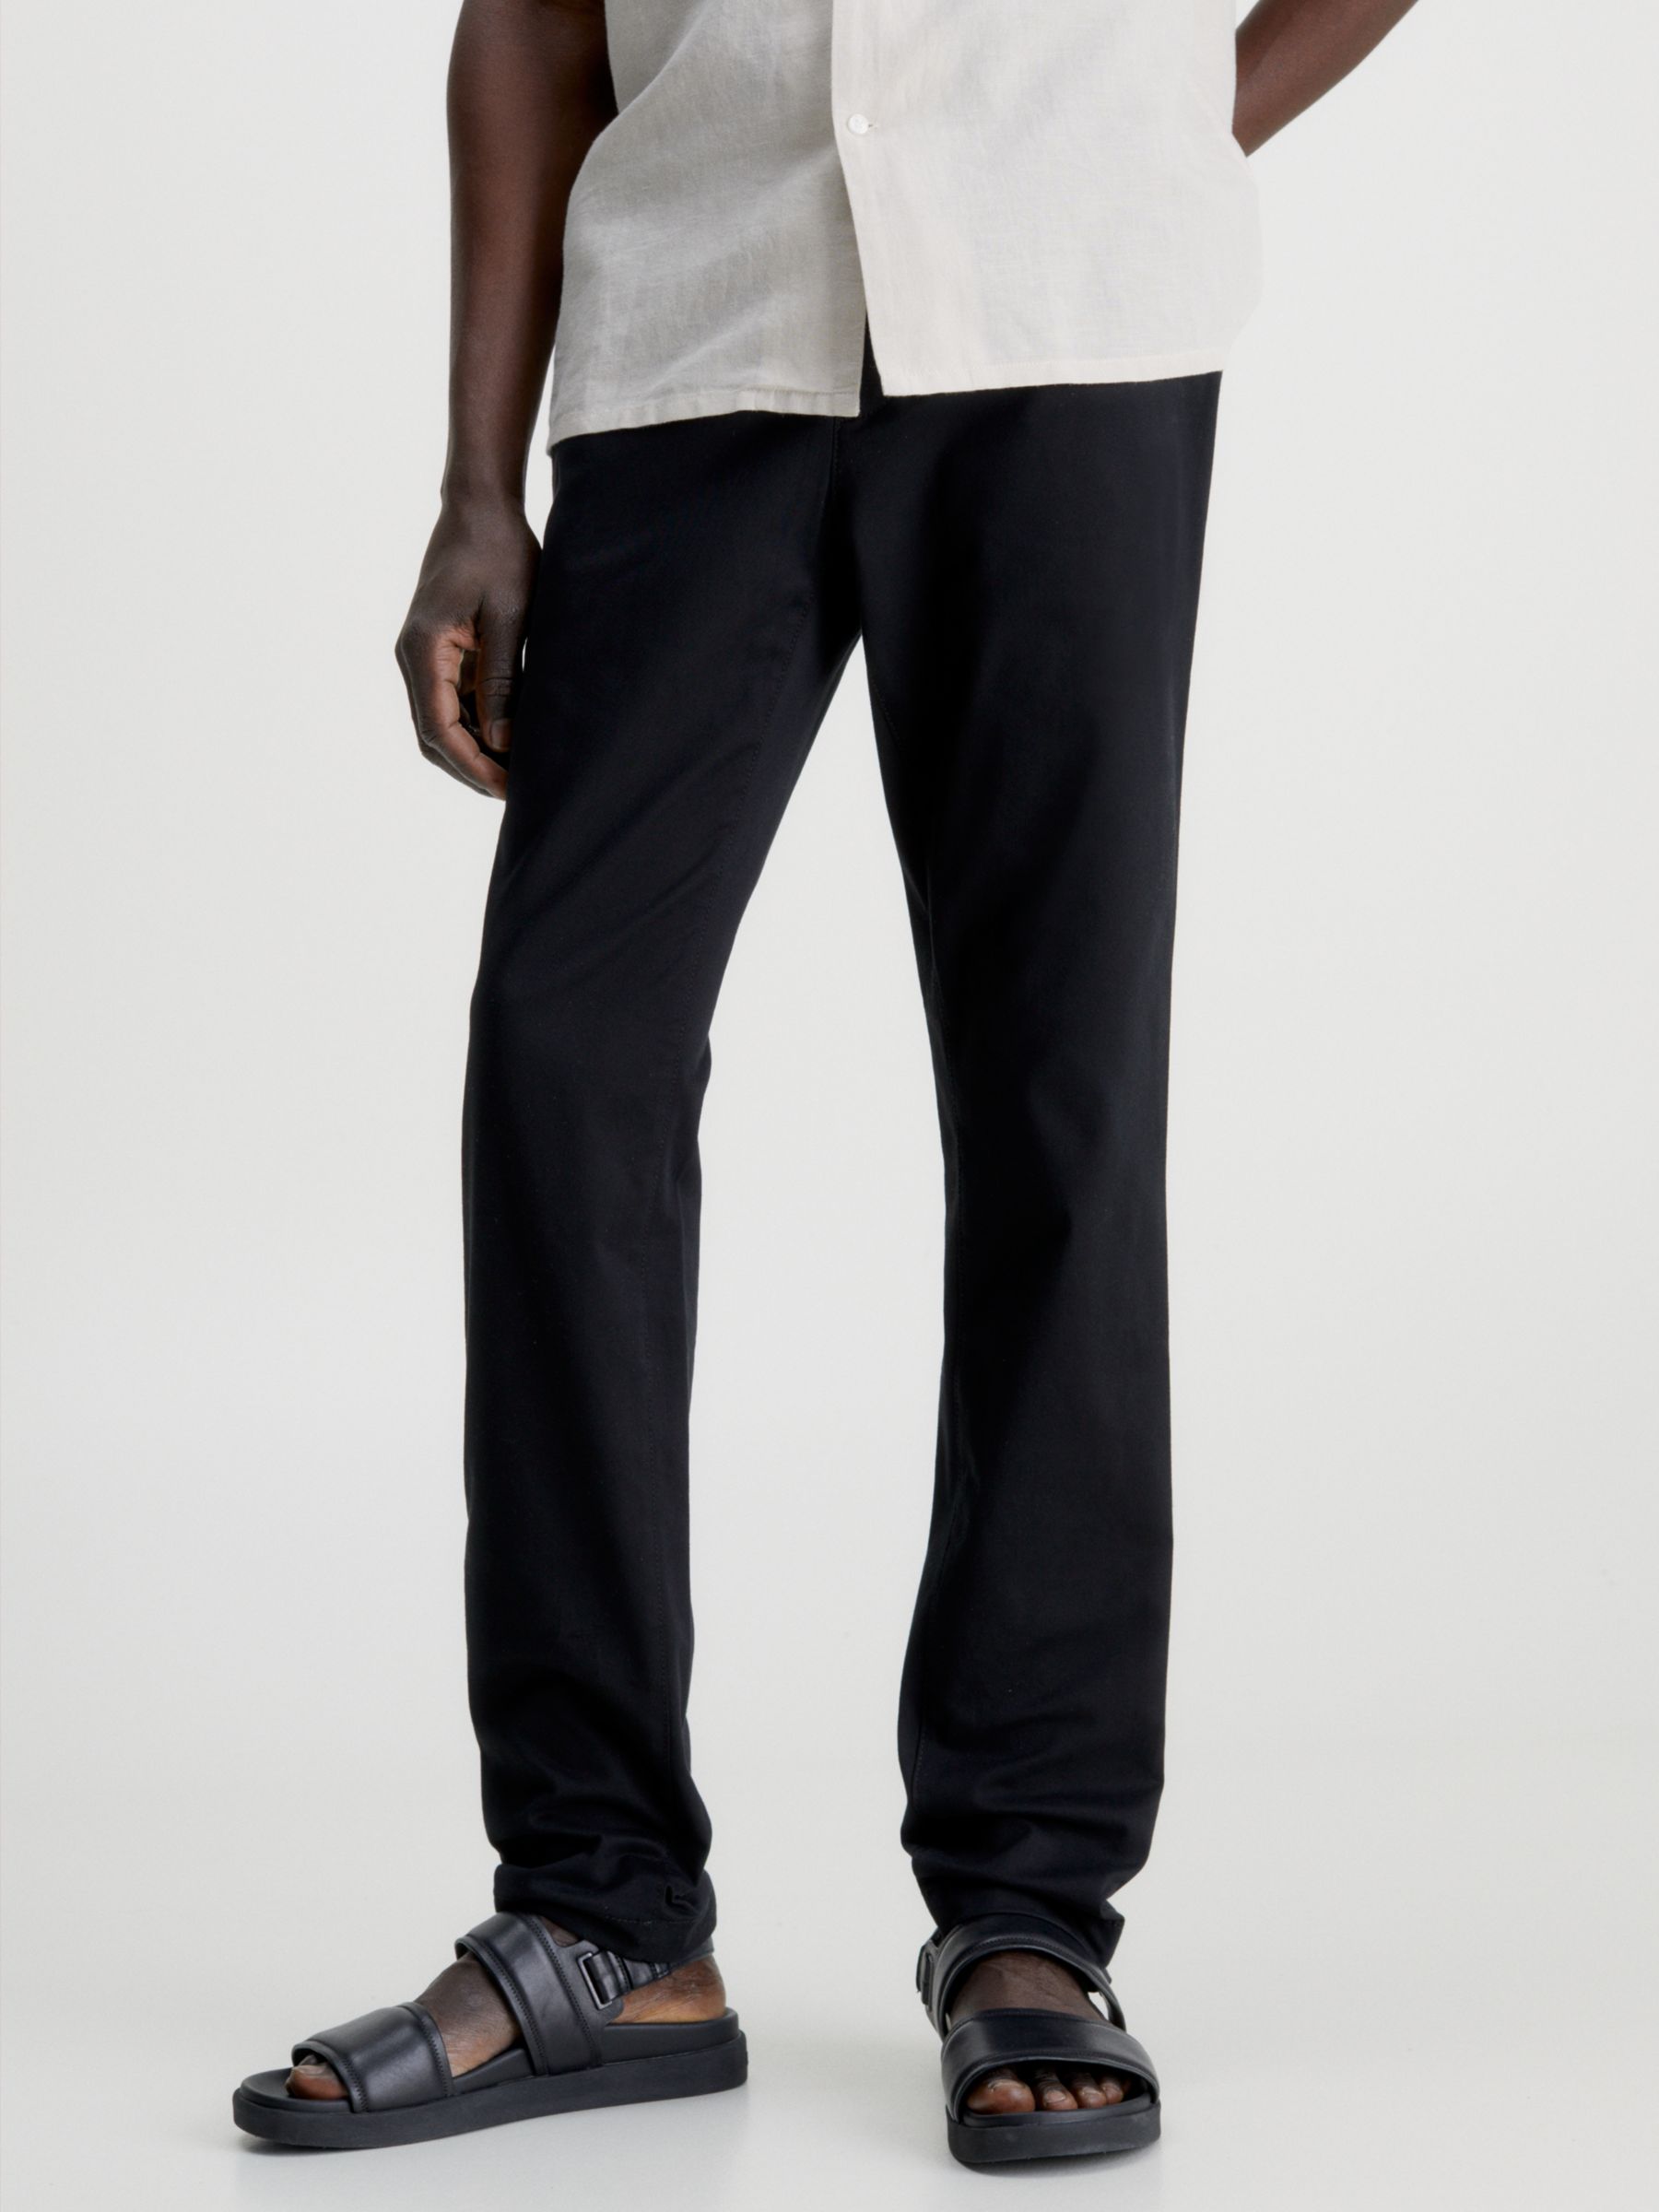 Calvin Klein Cotton Twill Slim Fit Chinos, Black at John Lewis & Partners